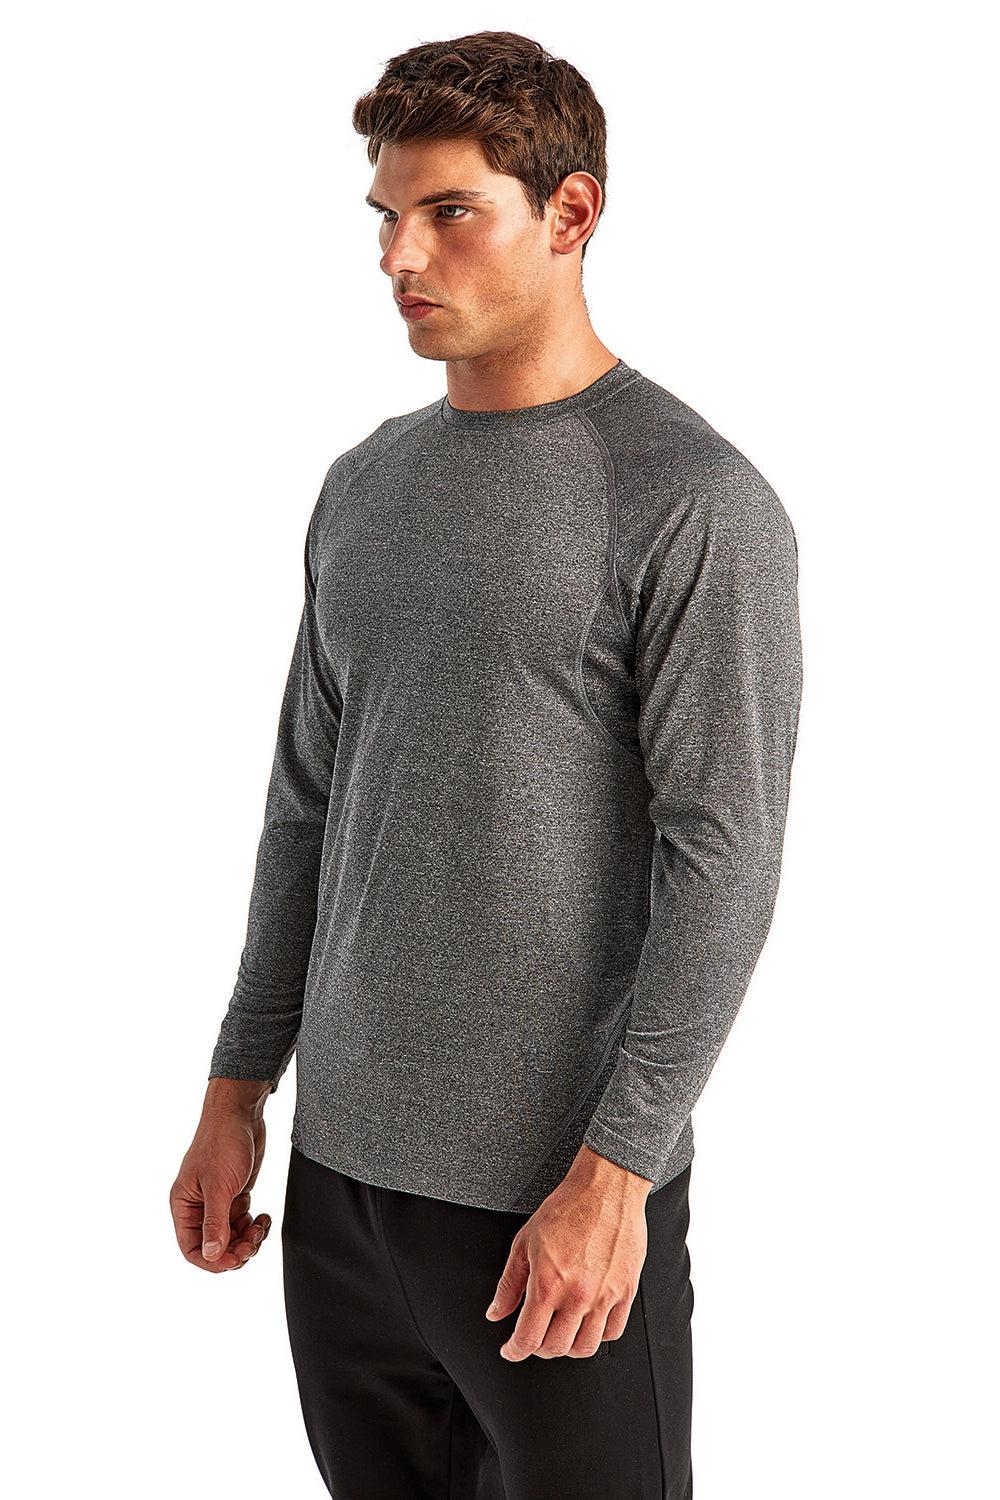 TriDri TD050 Mens Panelled Tech Moisture Wicking Long Sleeve Crewneck T-Shirt Black Melange 3Q